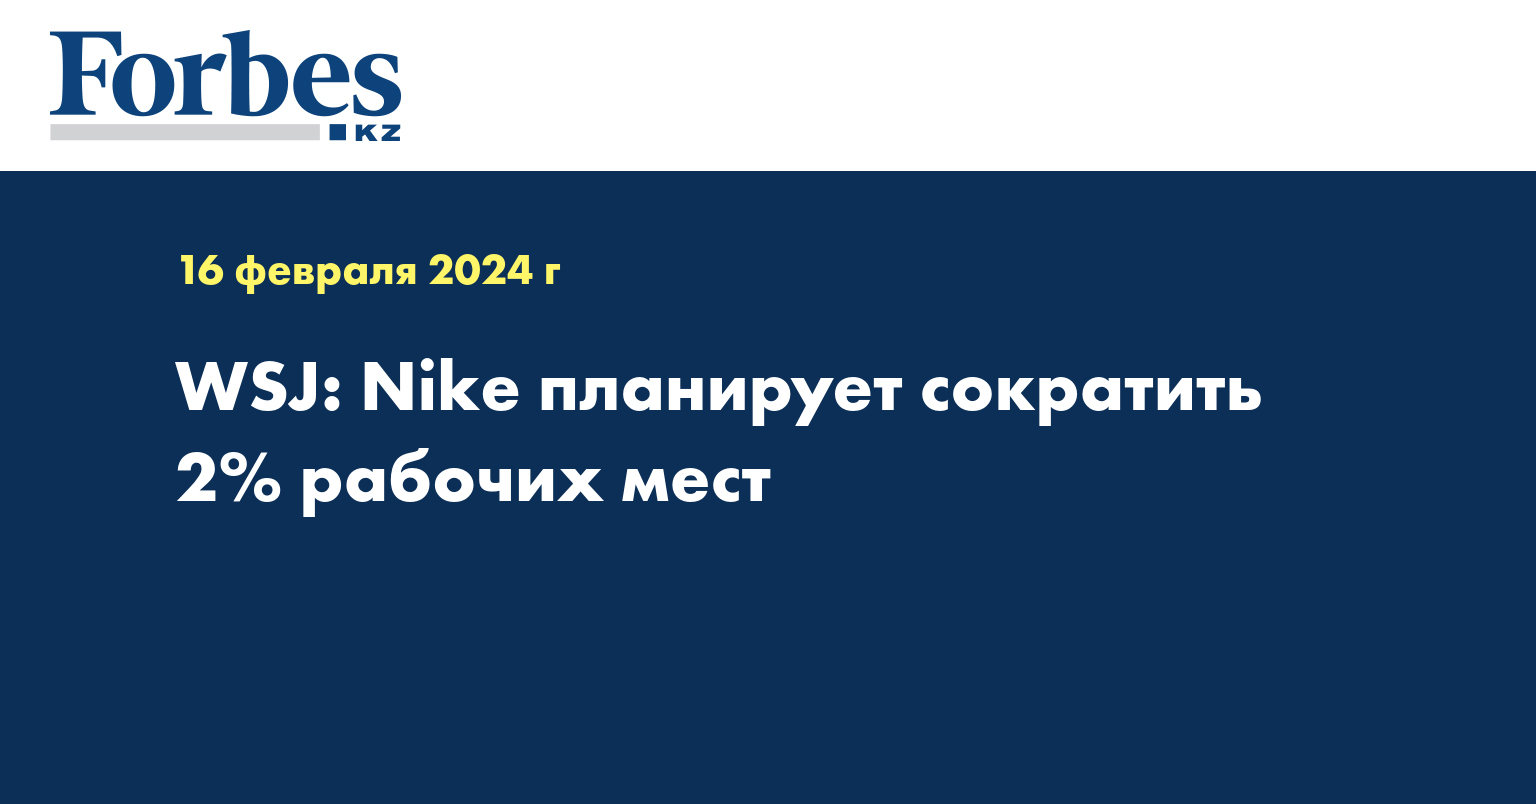 WSJ: Nike планирует сократить 2% рабочих мест